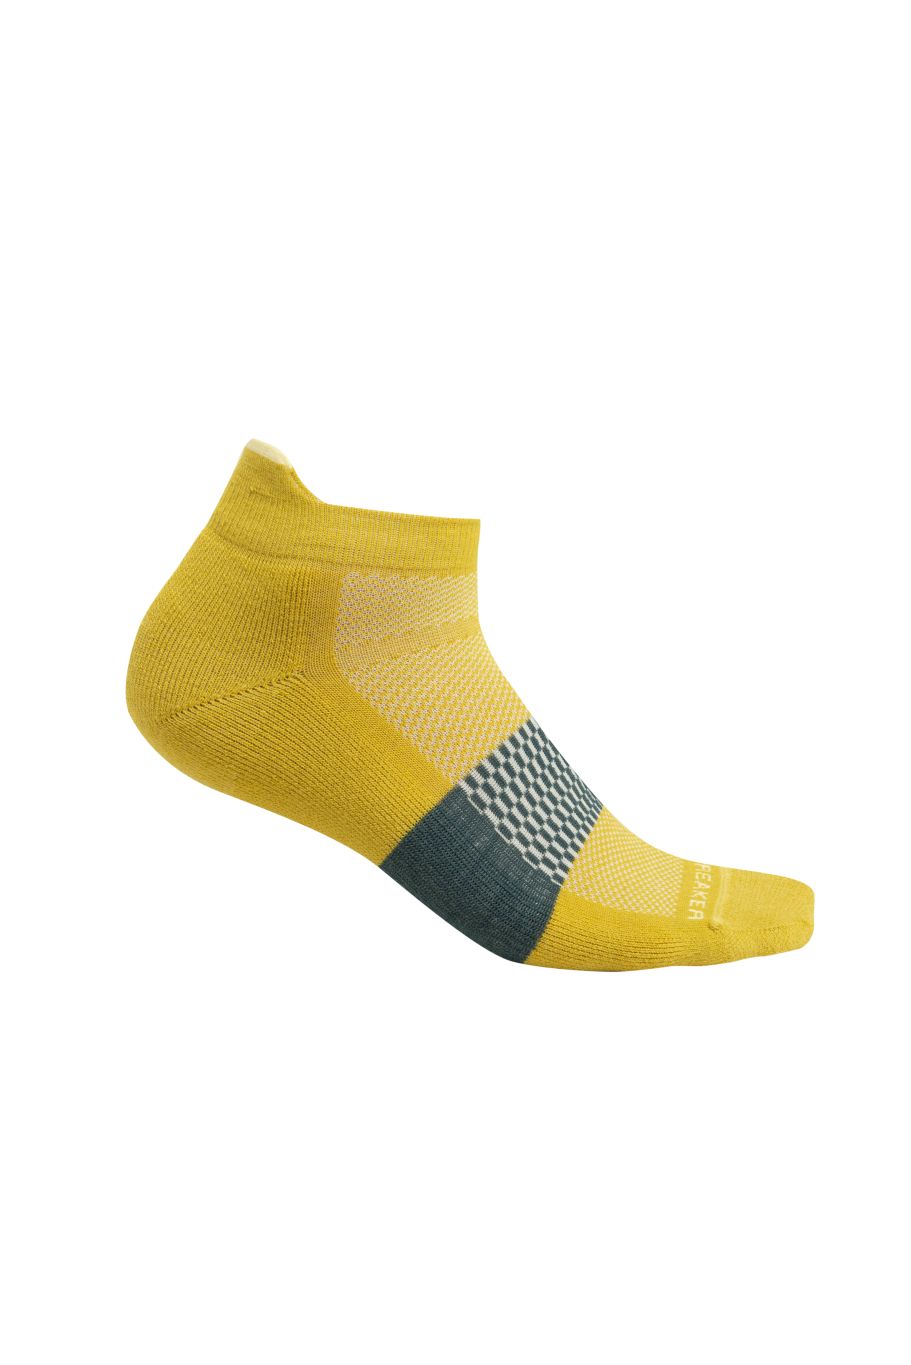 Pánské merino ponožky ICEBREAKER Mens Multisport Light Micro, Lux/Lucid/Fathom Green velikost: 42-44 (M)